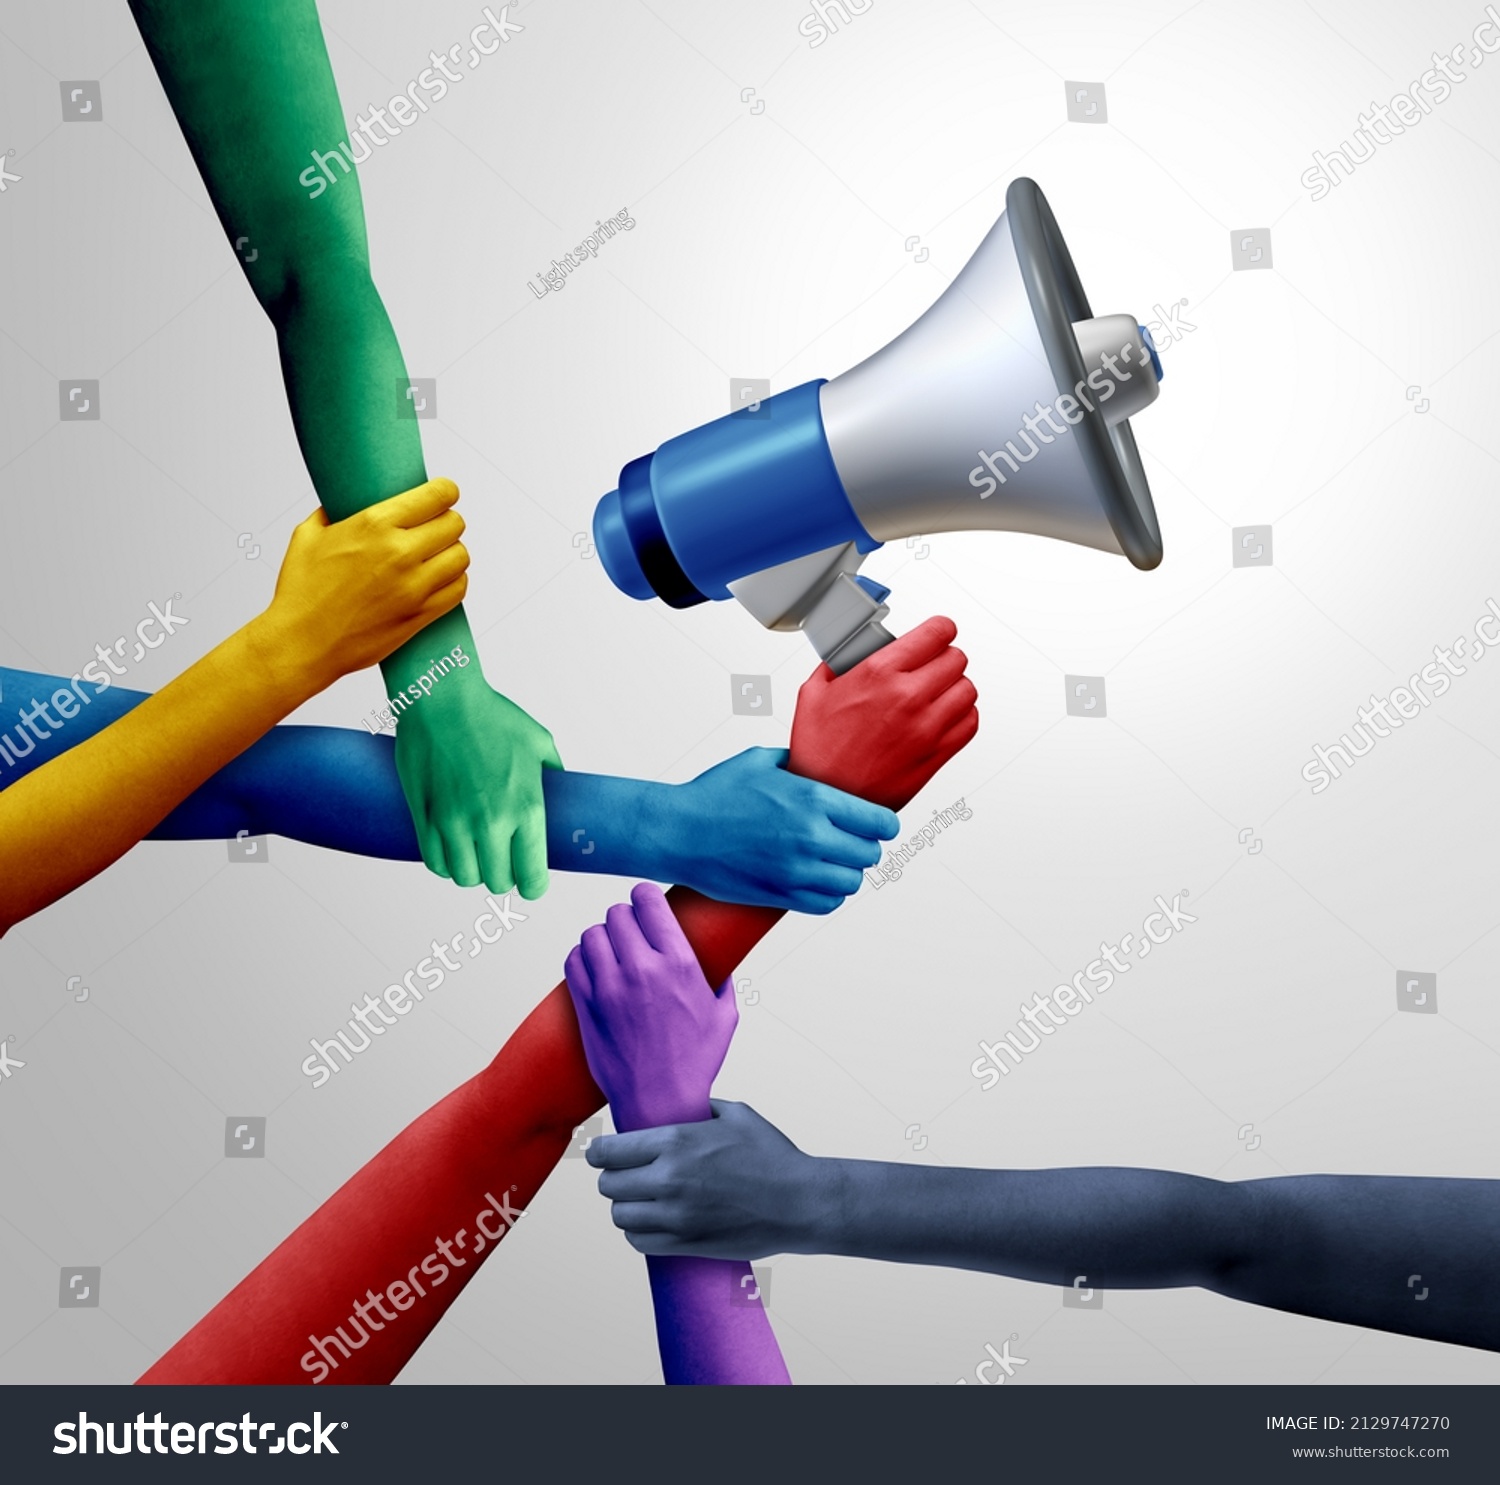 One voice Images, Stock Photos & Vectors | Shutterstock